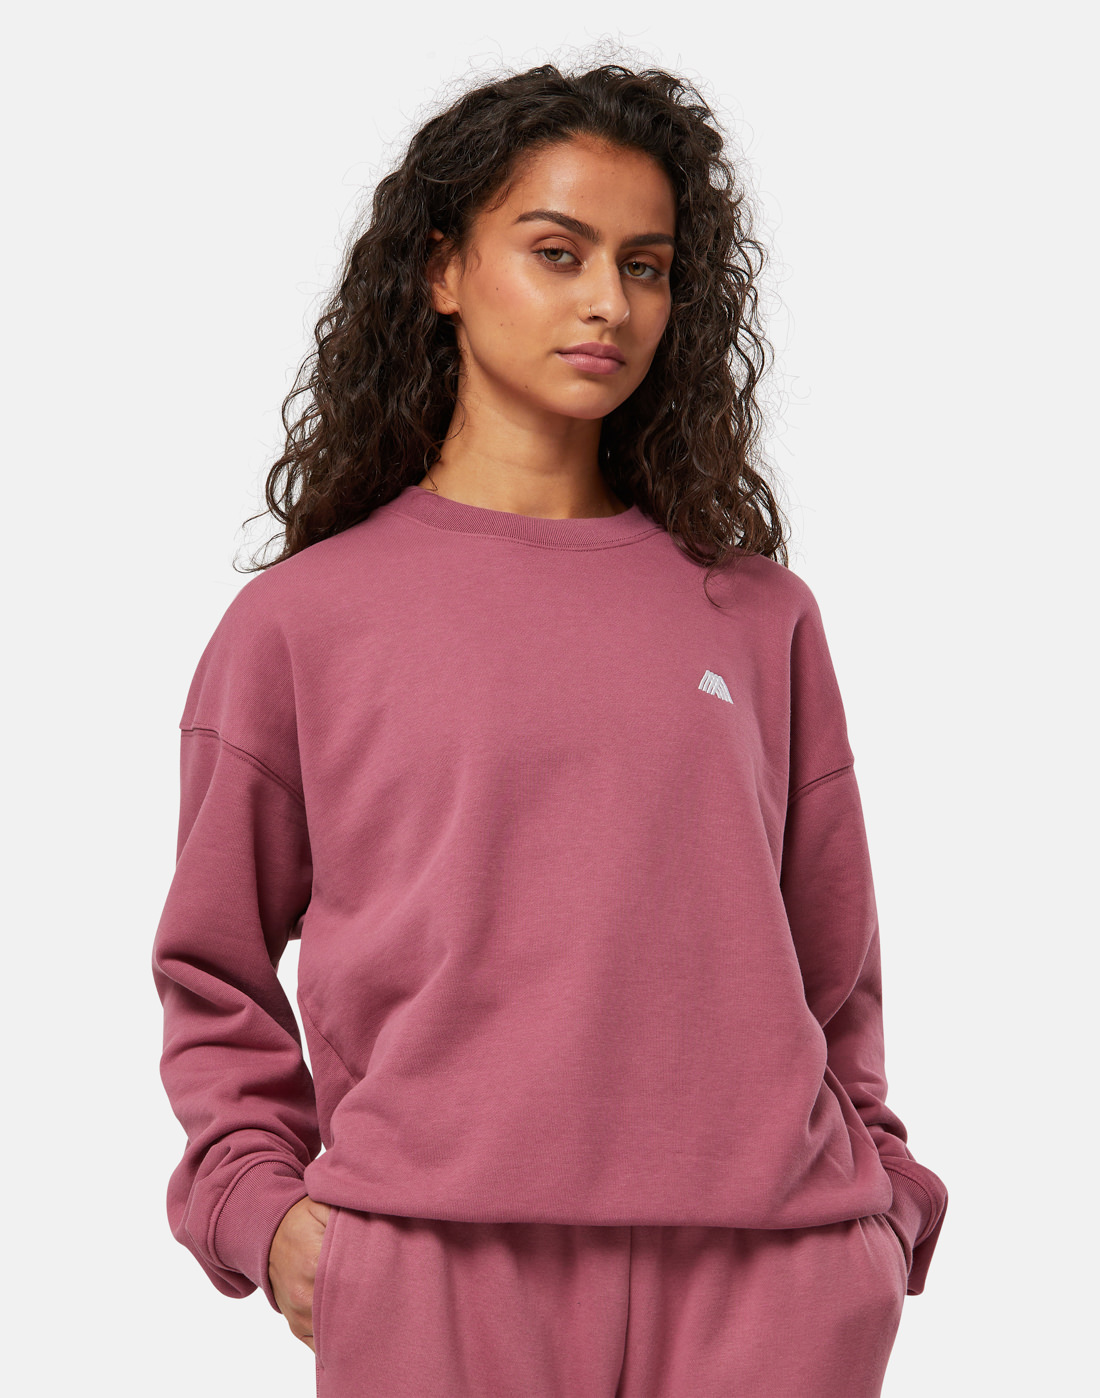 4TH ARQ Womens Marley Sweatshirt - Pink | Life Style Sports IE